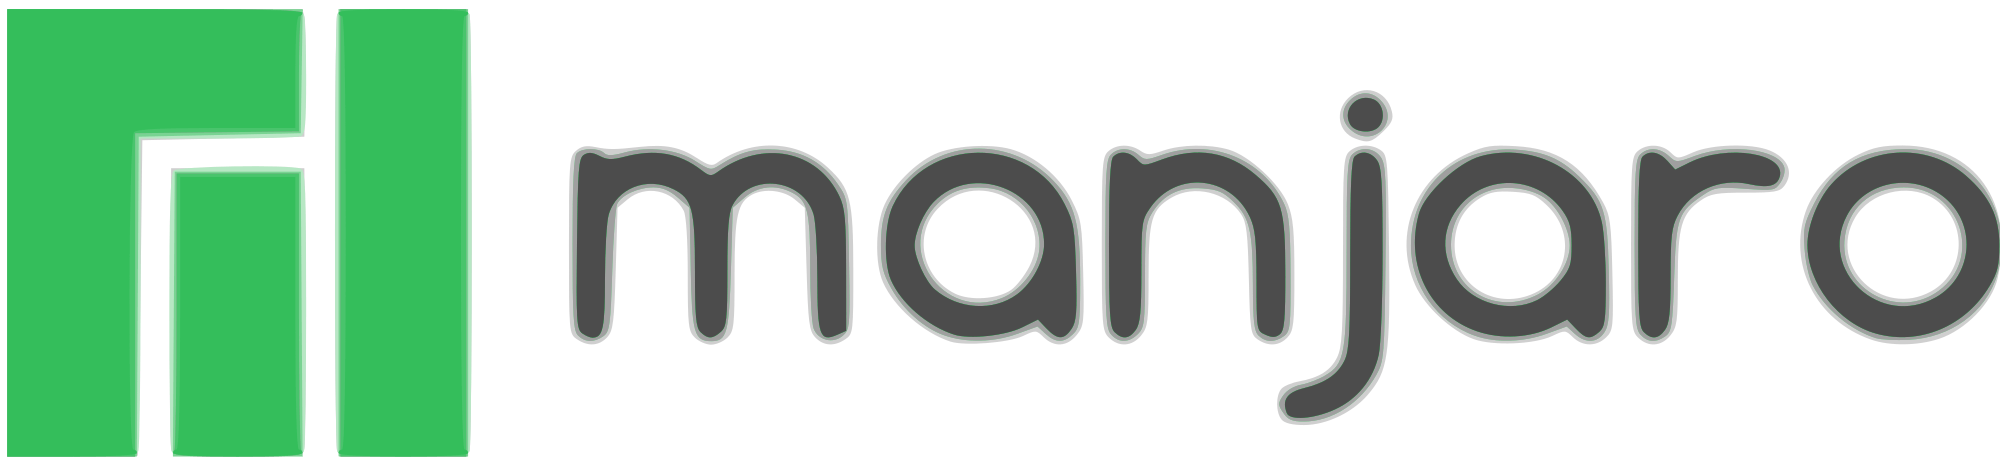 Manjaro Logo - File:Manjaro logo text.svg - Wikimedia Commons